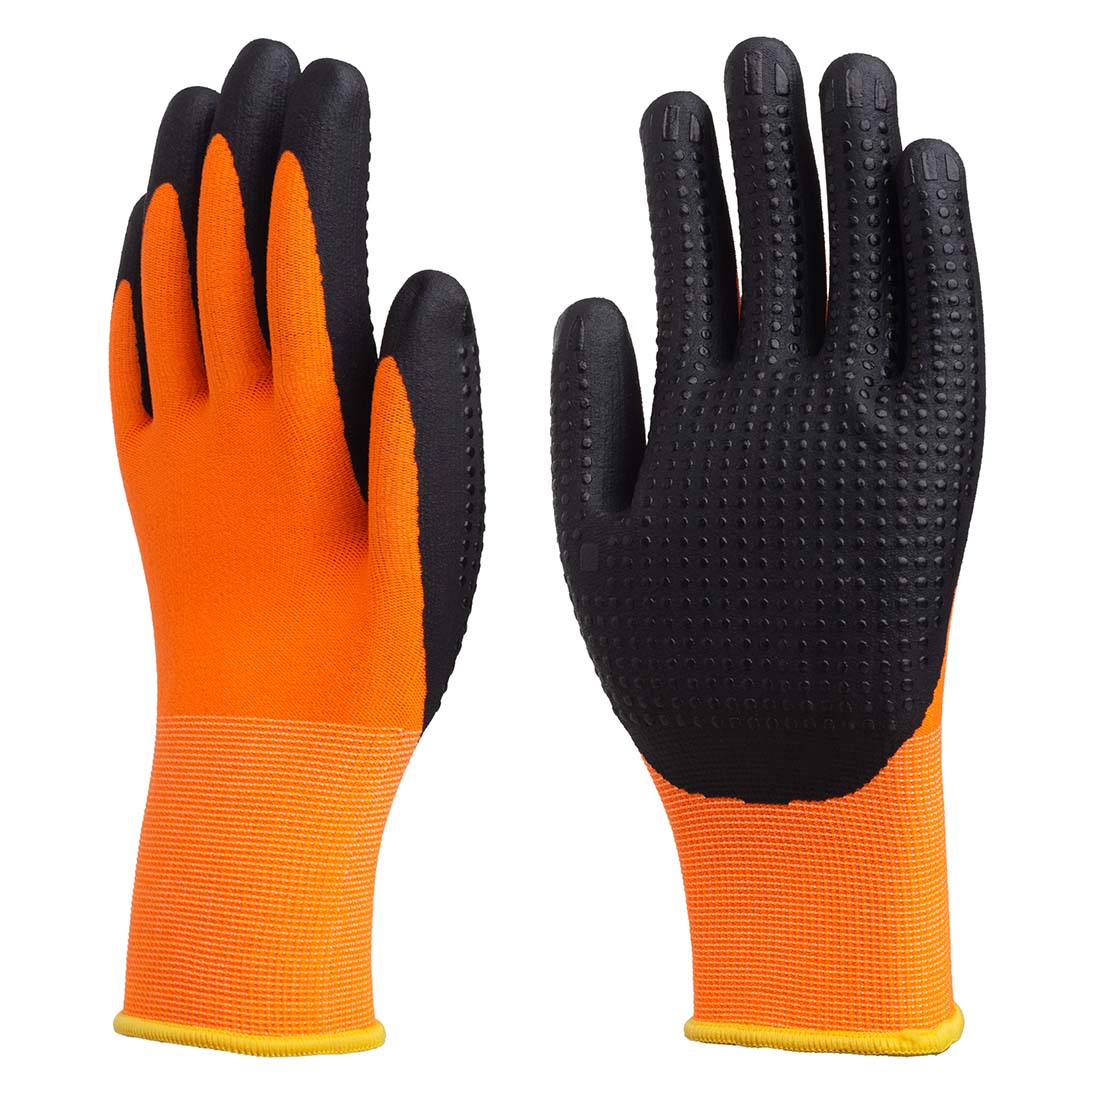 15G nylon spandex glove micro foam nitrile & dots coated on palm 